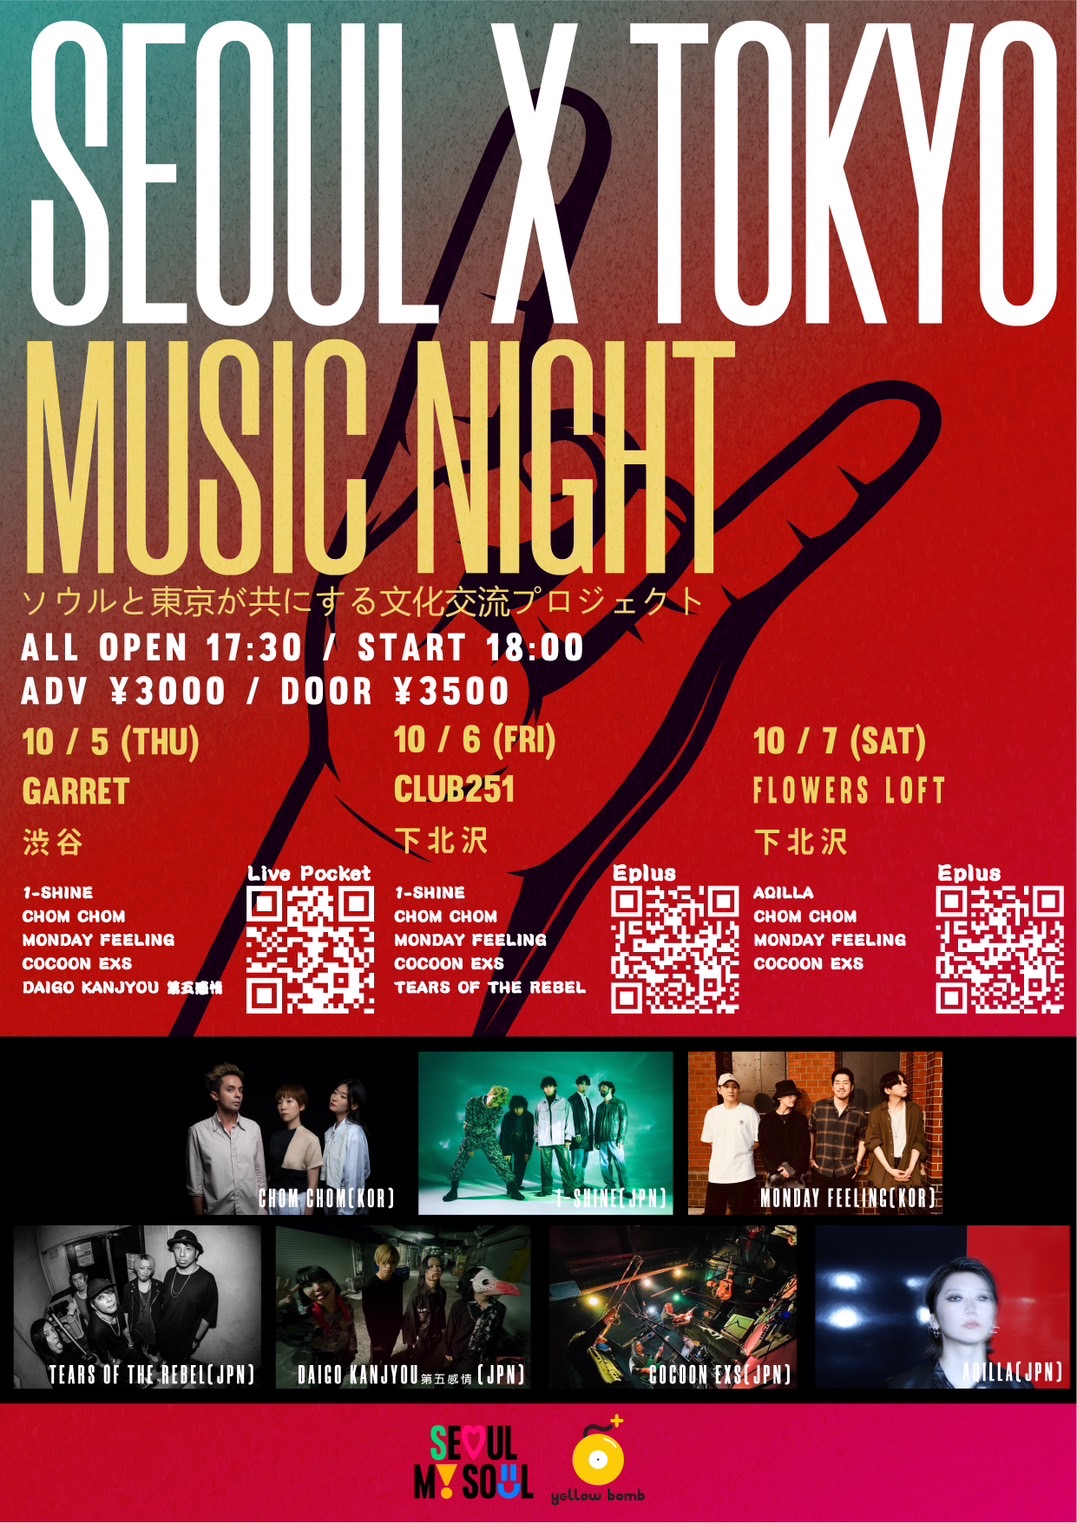 SEOUL × TOKYO “MUSIC NIGHT”